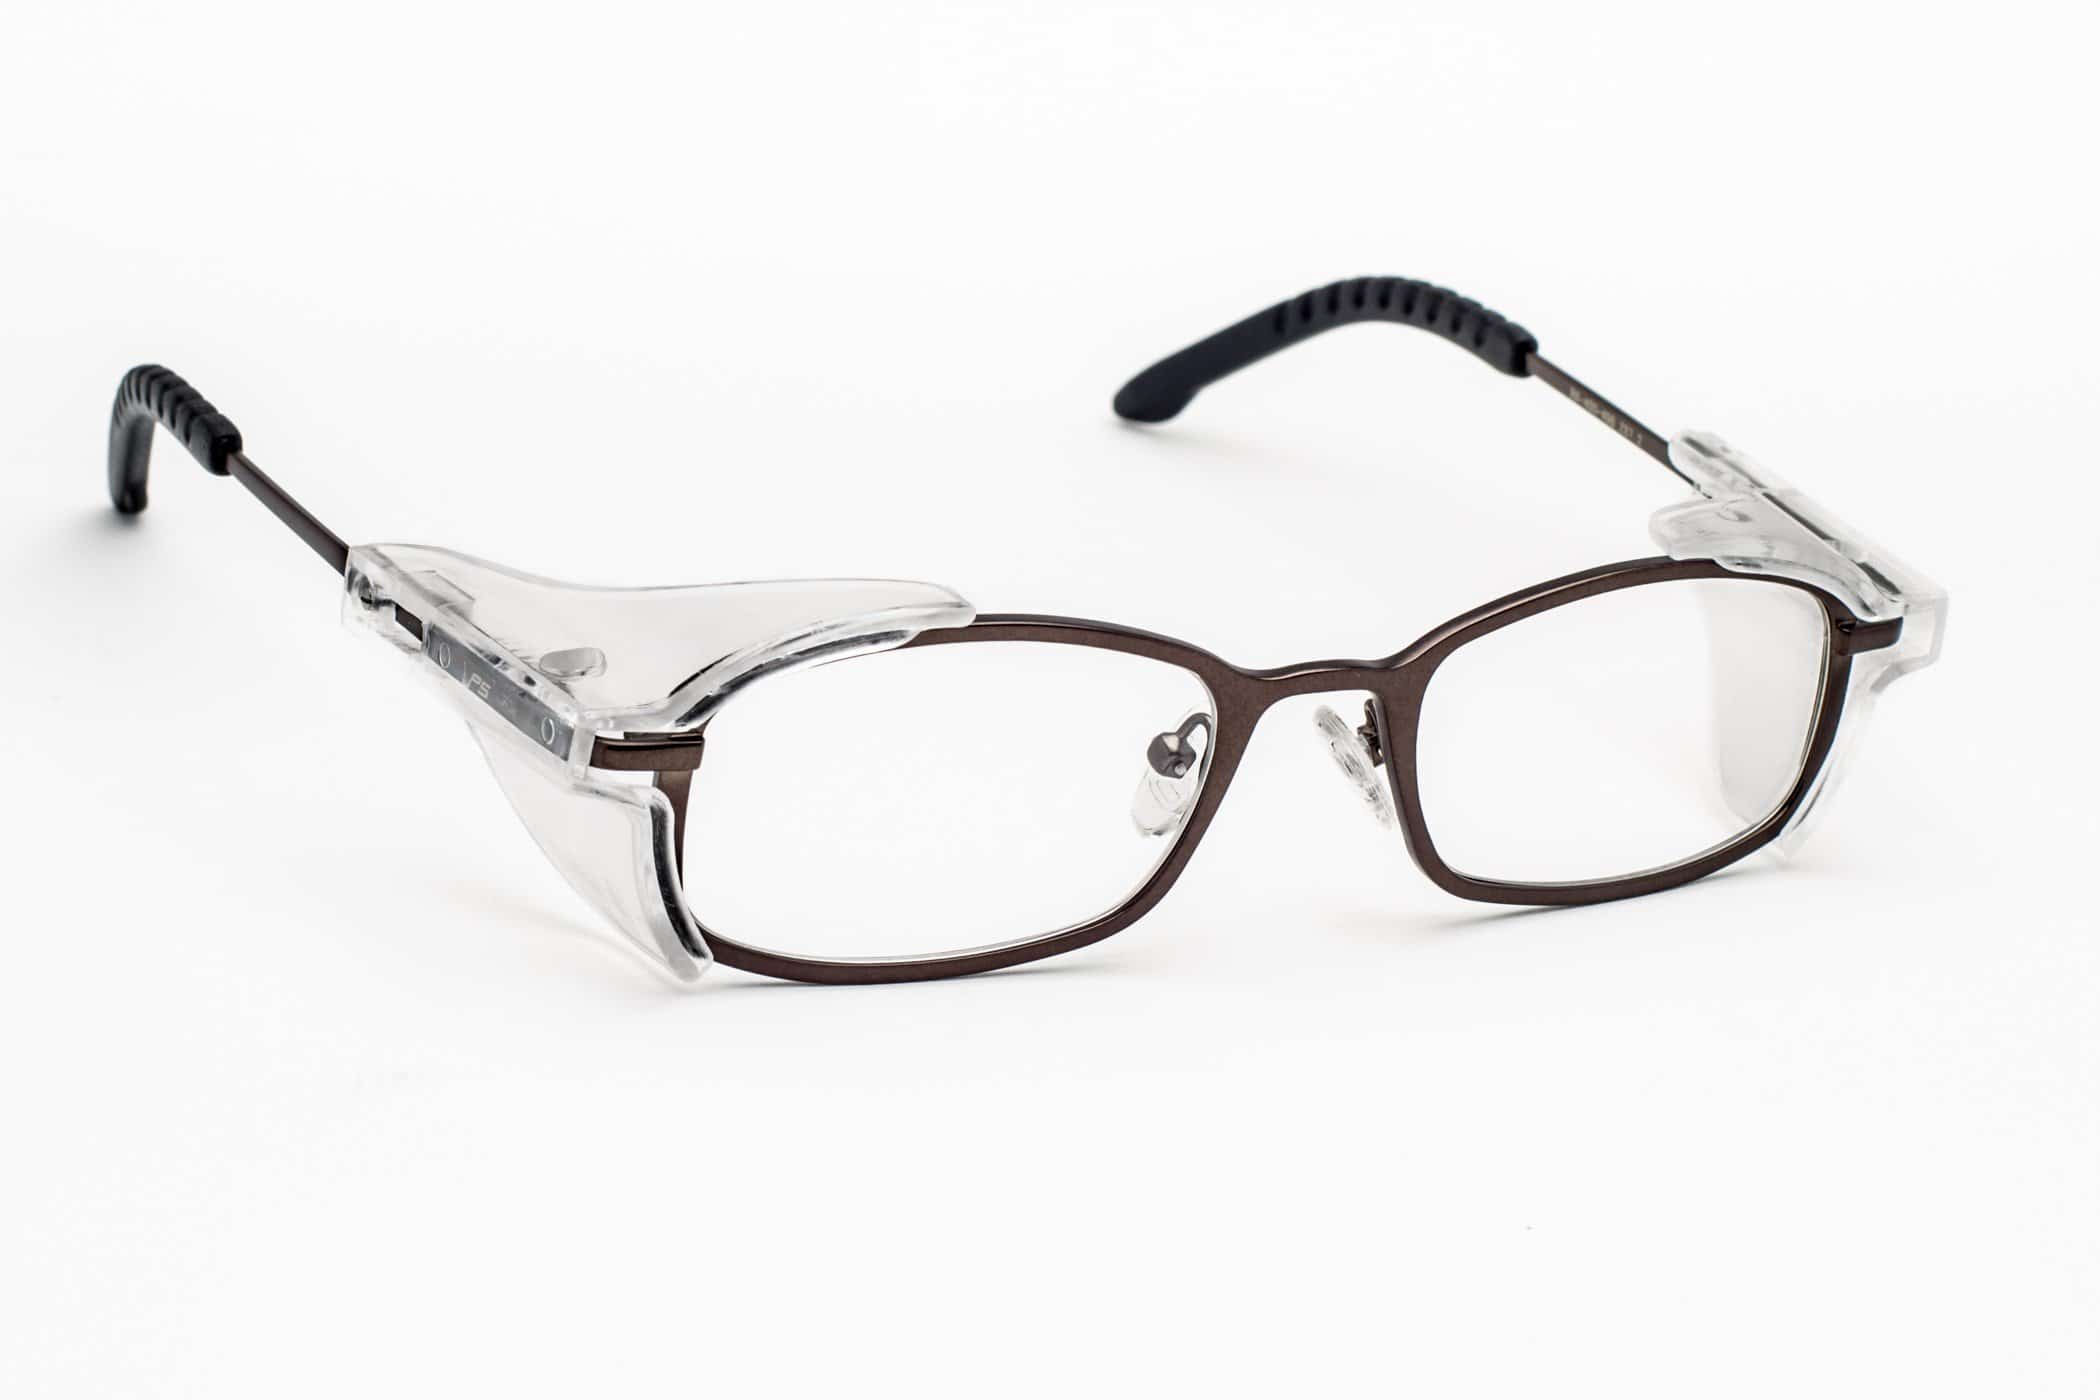 Buy Prescription Safety Glasses RX-400 | Safety Protection Glasses